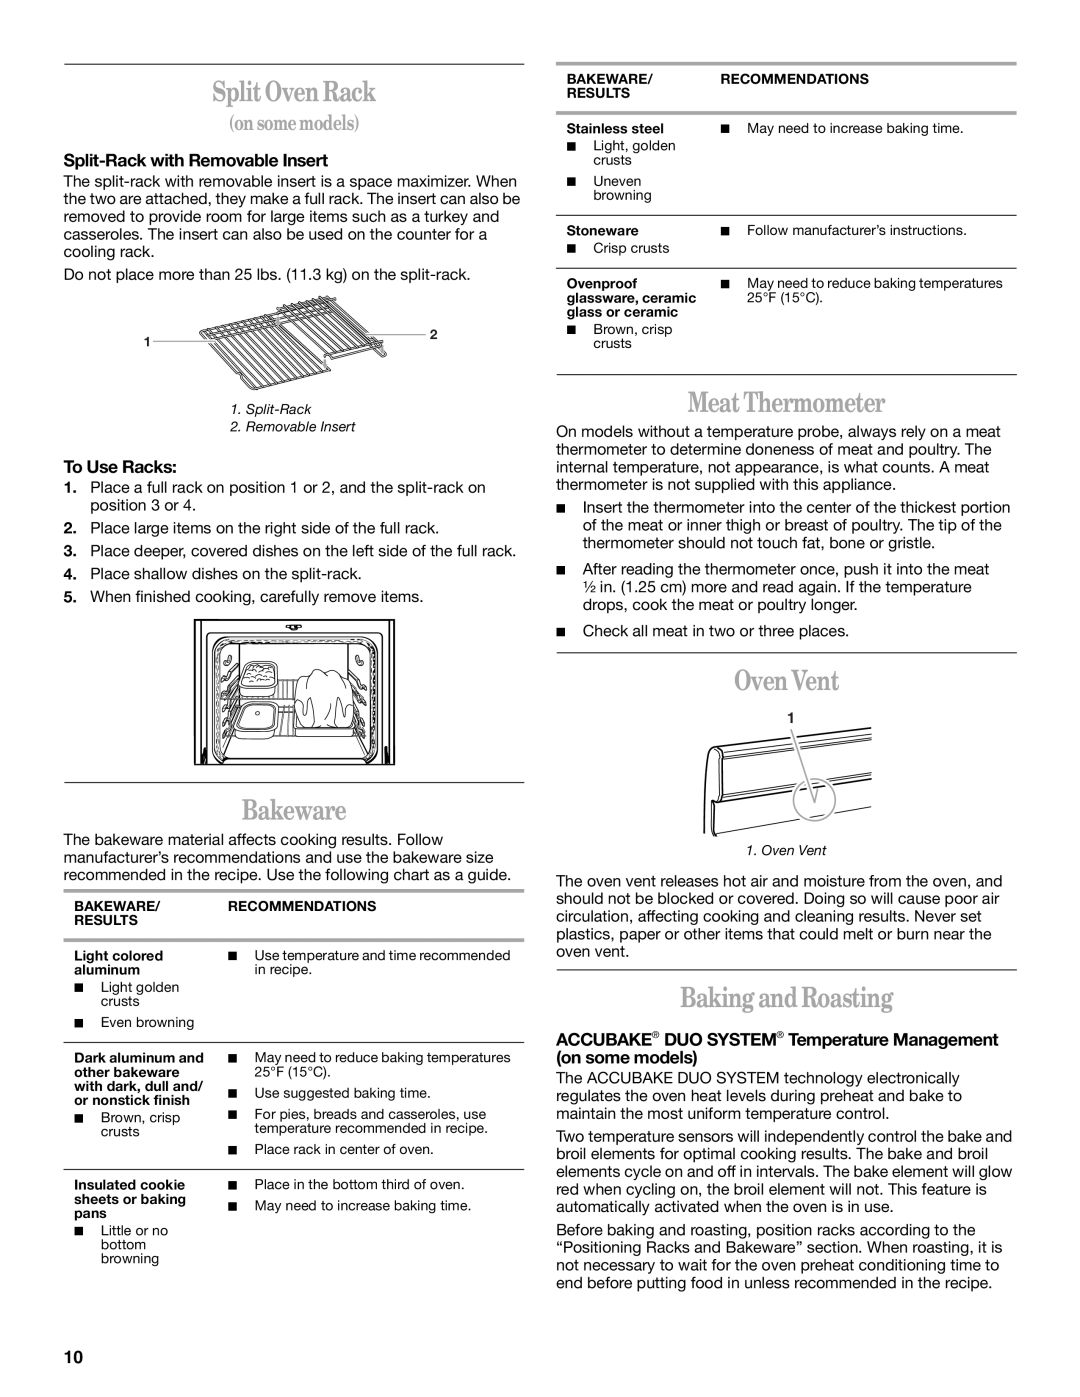 Whirlpool SF367LEMB0 manual Split Oven Rack, Bakeware, MeatThermometer, Oven Vent, Baking and Roasting, on somemodels 